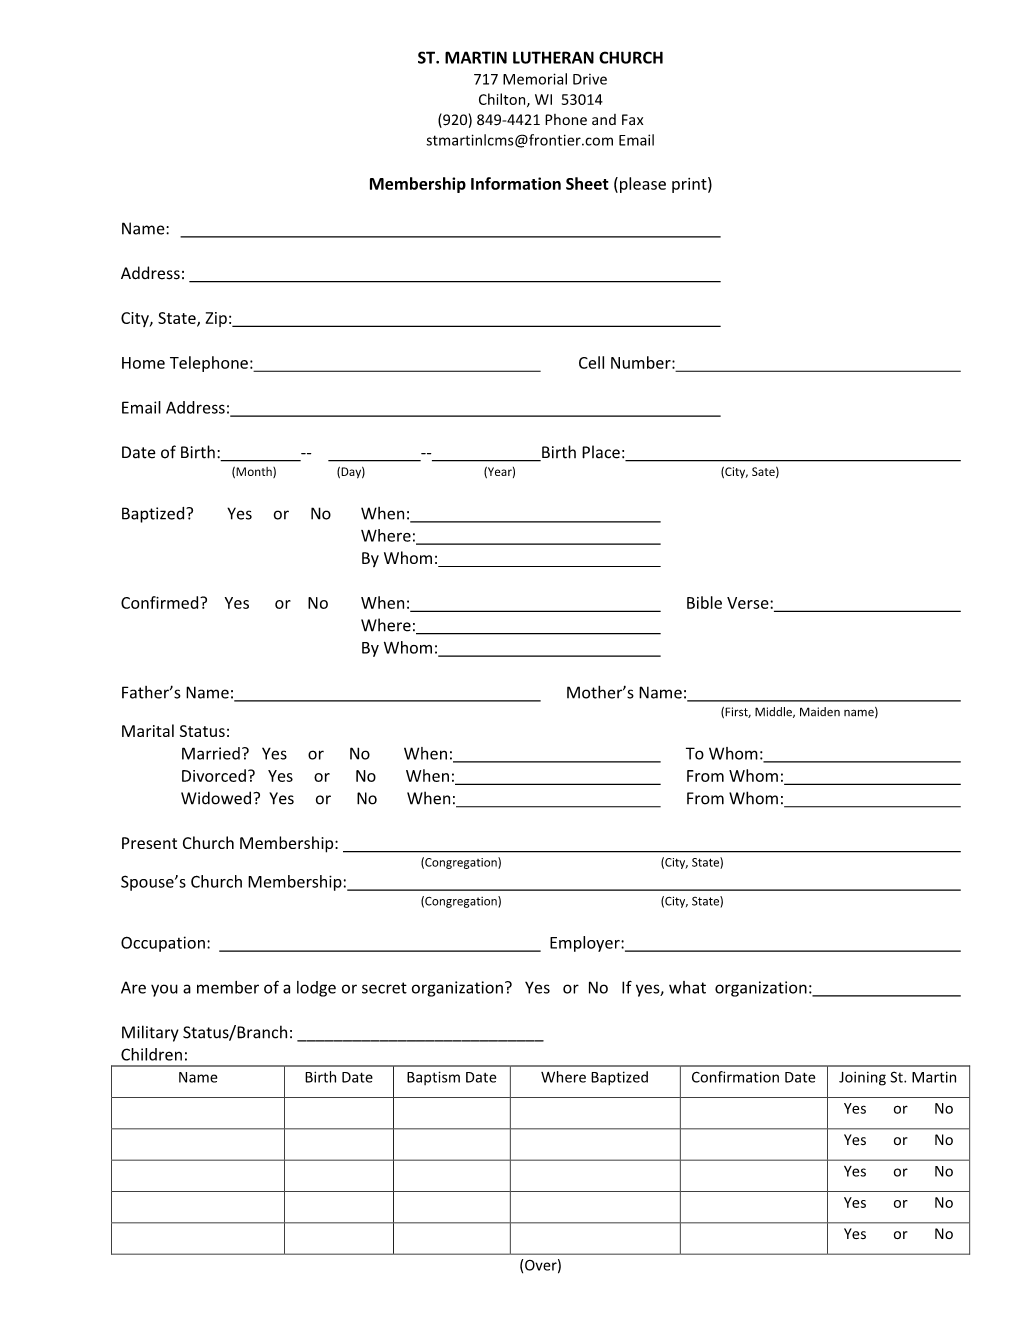 ST. MARTIN LUTHERAN CHURCH Membership Information Sheet